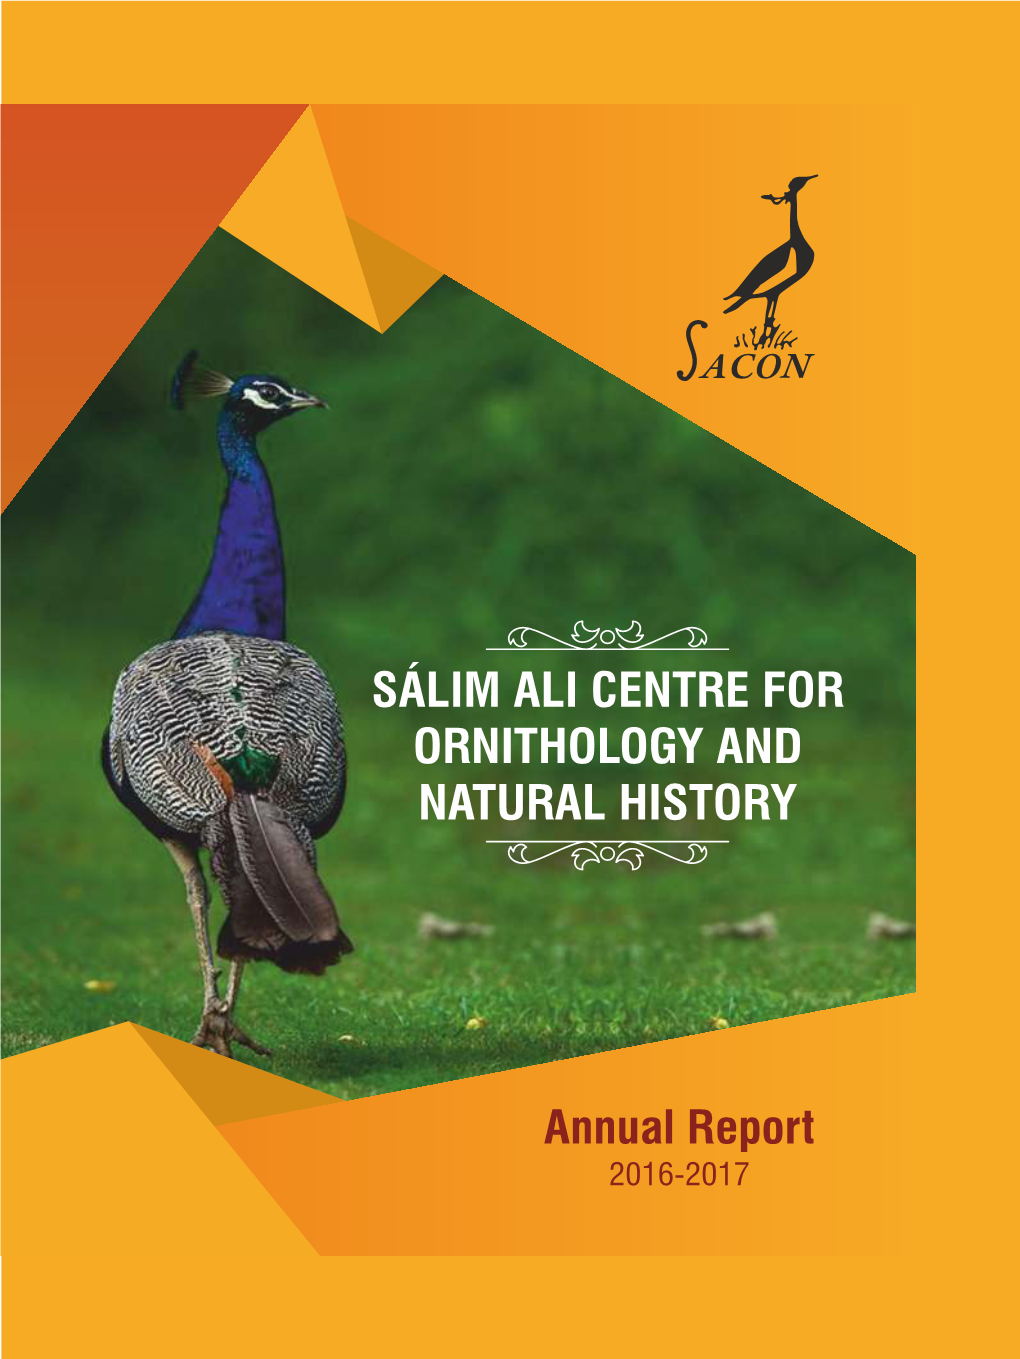 SACON Annual Report 2016-2017